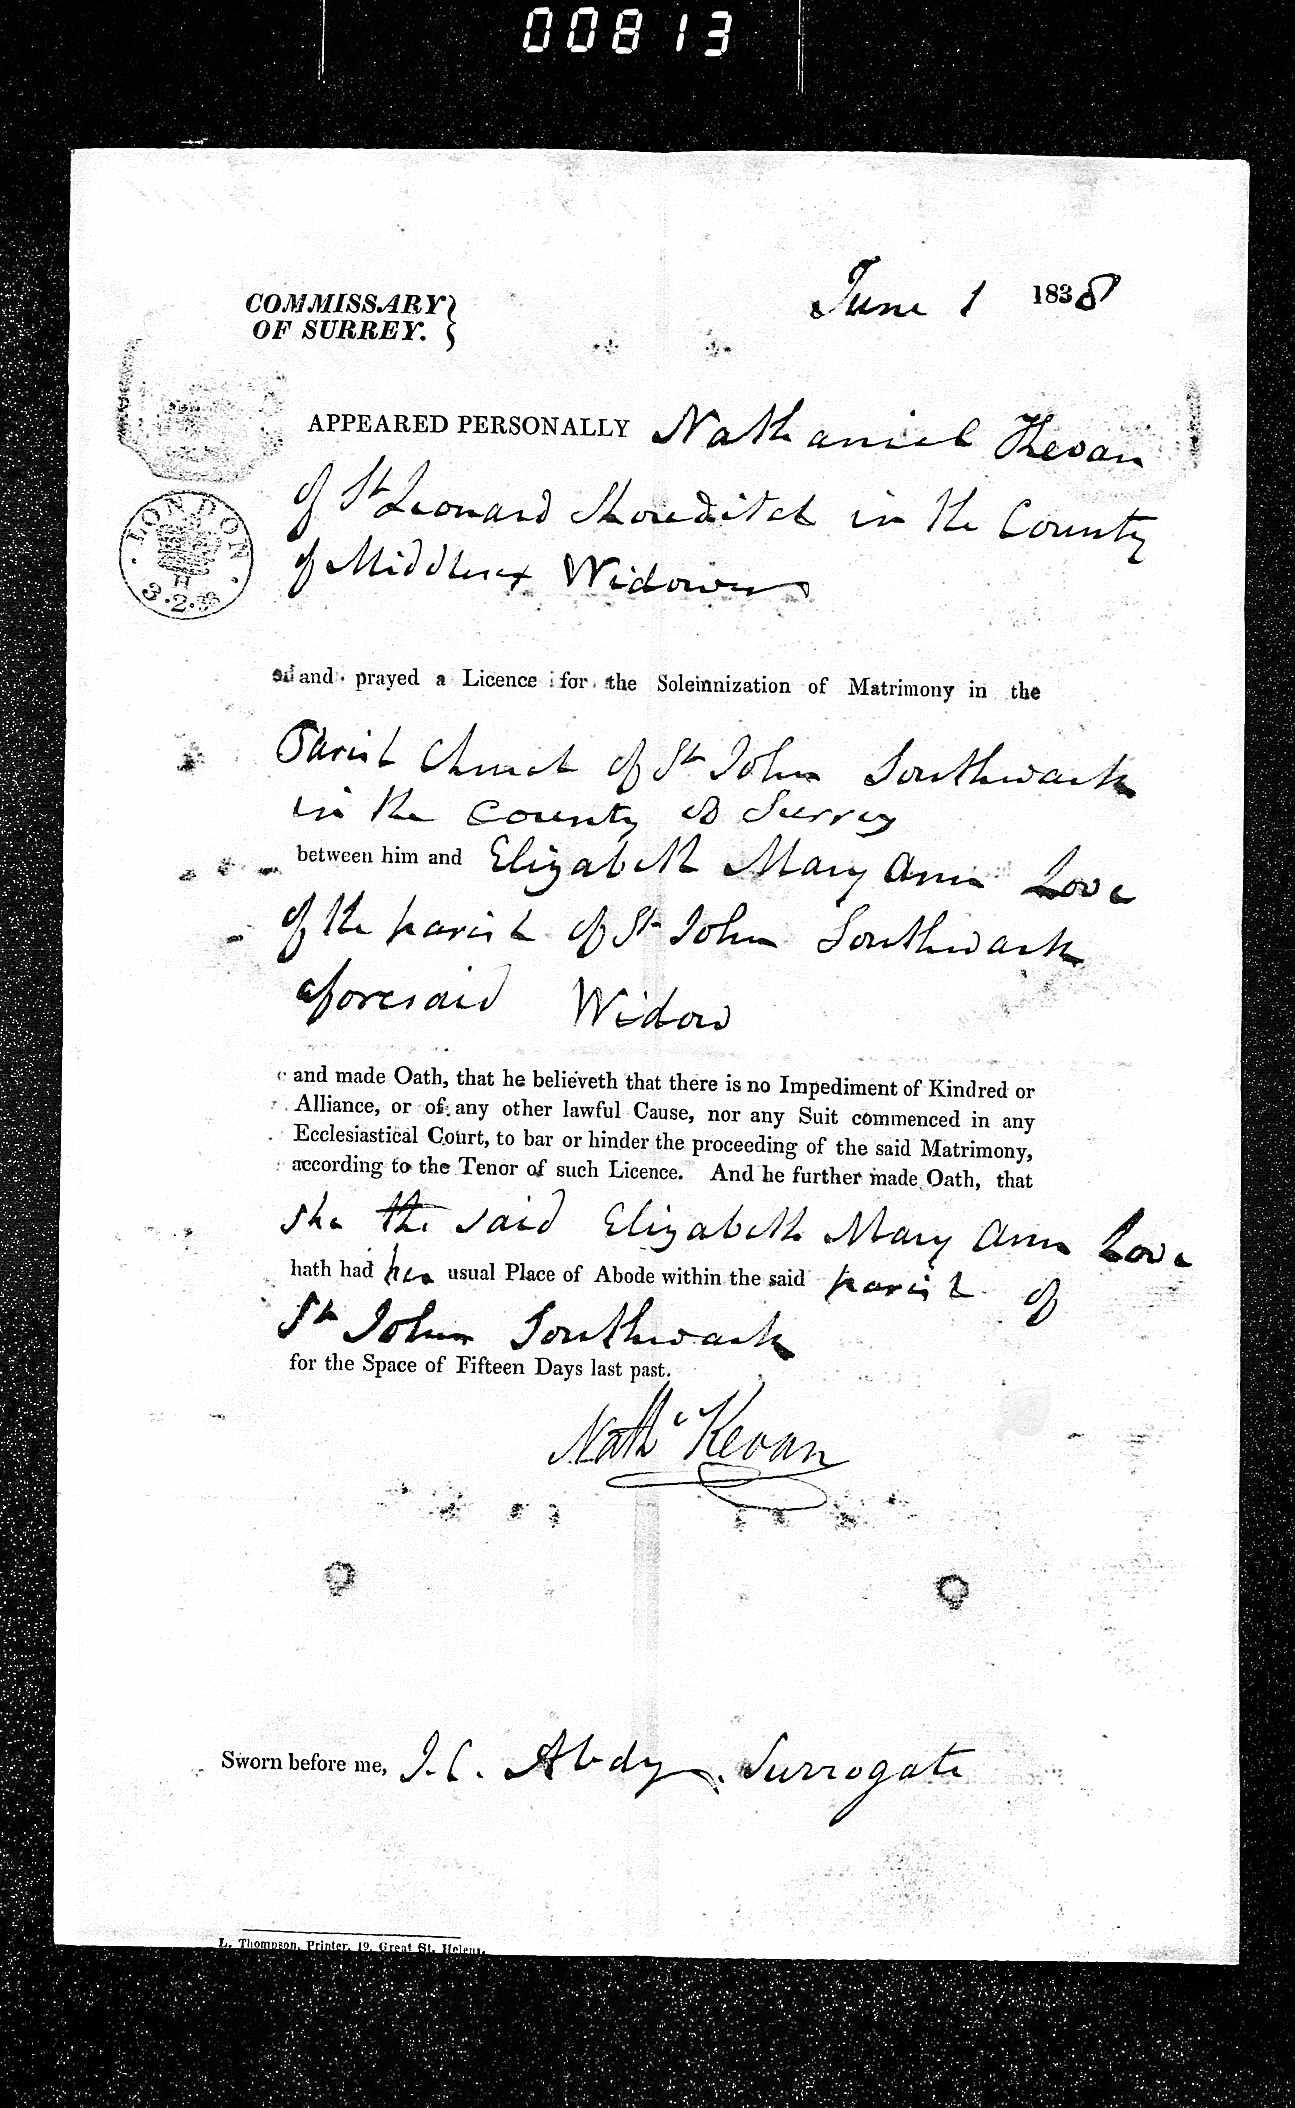 1838 marriage of Elizabeth Mary Ann Armitage to Nathaniel Kevan